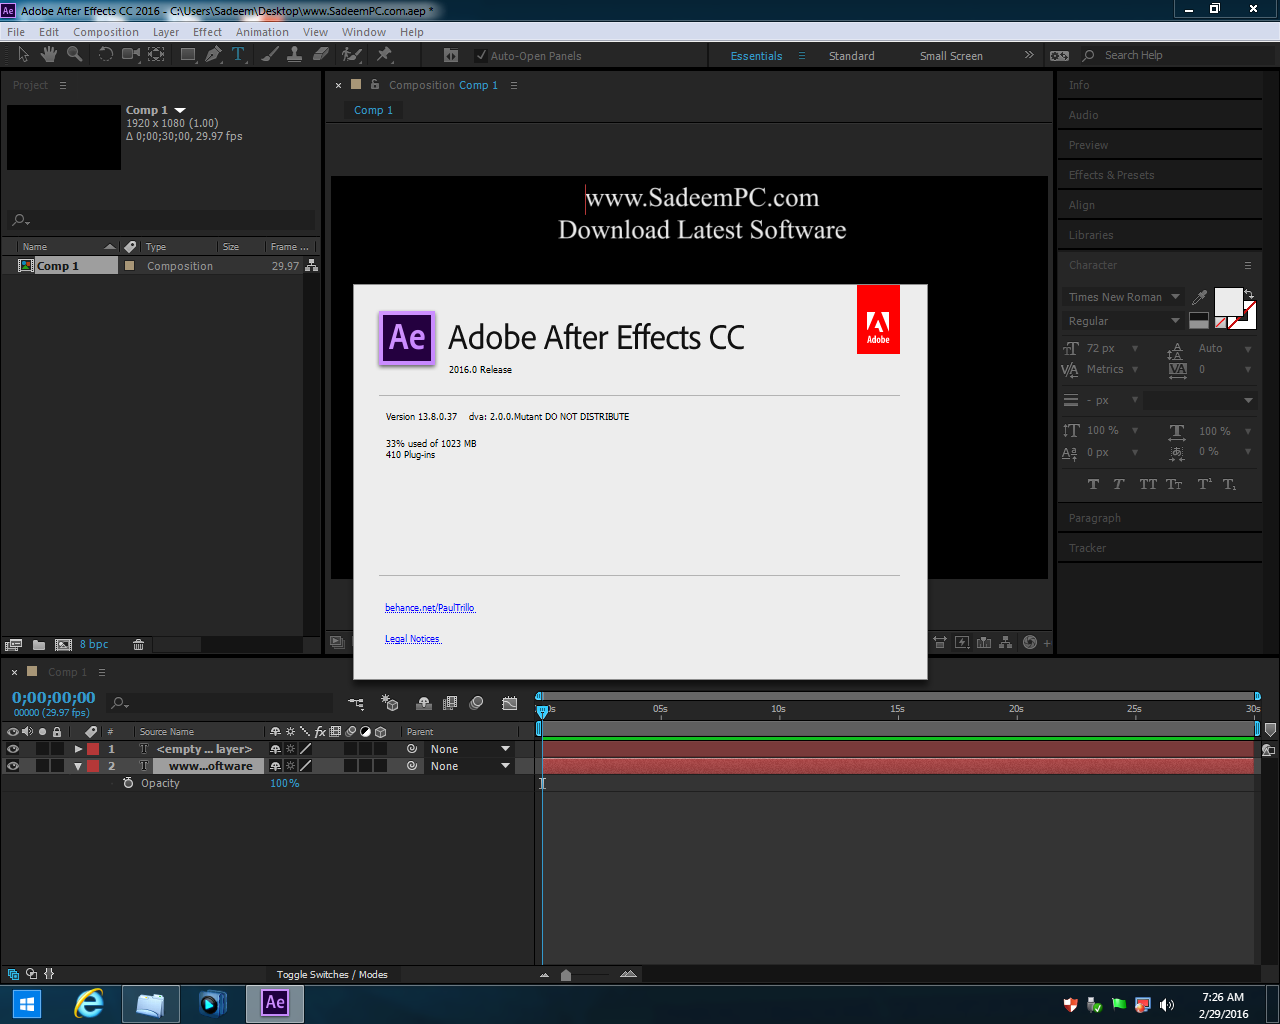 Adobe After Effects CC 2016 V14.6 Crack Download Pc